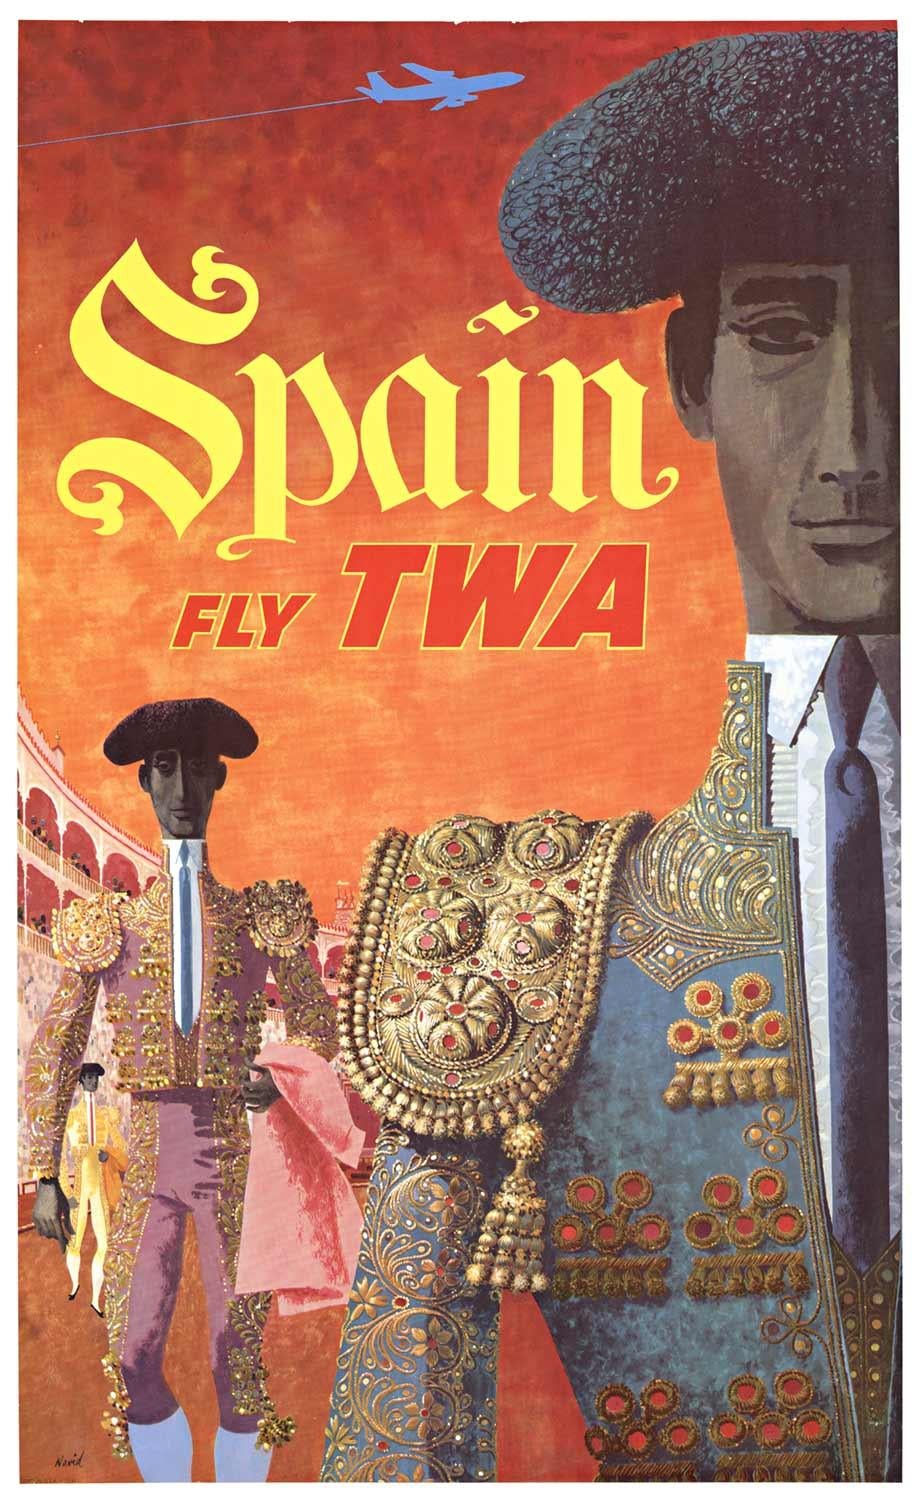 David Klein Portrait Print - Original "Spain Fly TWA" vintage airline travel poster  Matador image